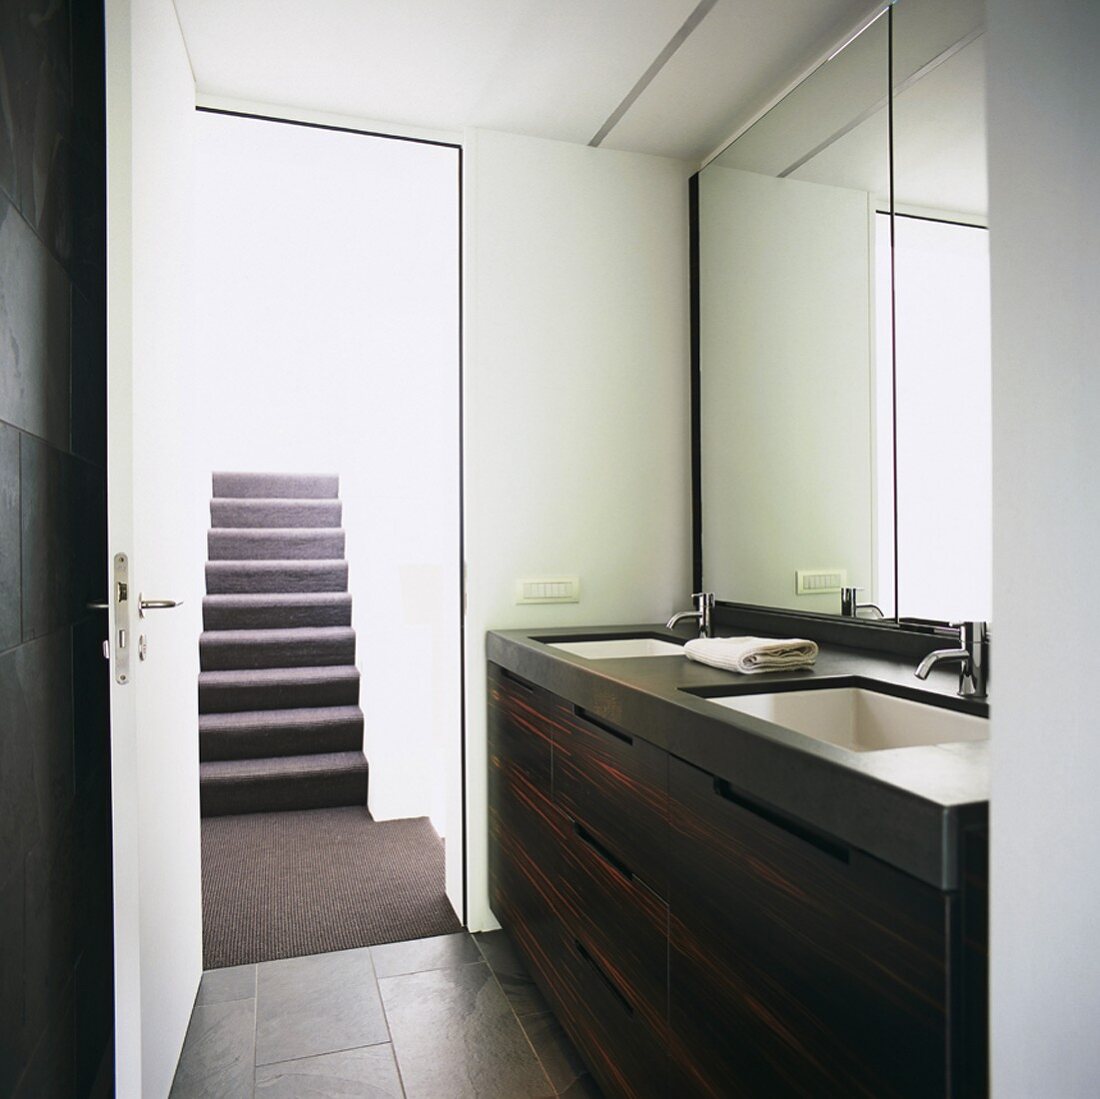 Modern washstand with twin sinks below mirrored wall